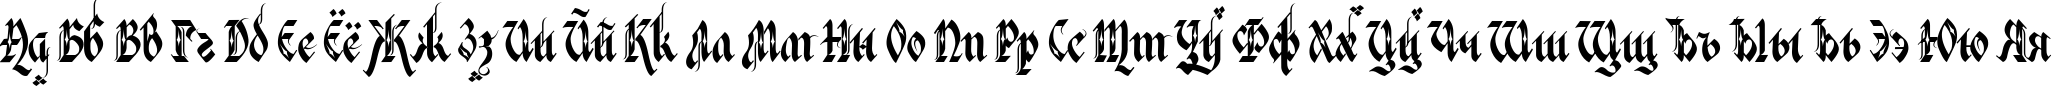 Пример написания русского алфавита шрифтом Verona Gothic Flourishe